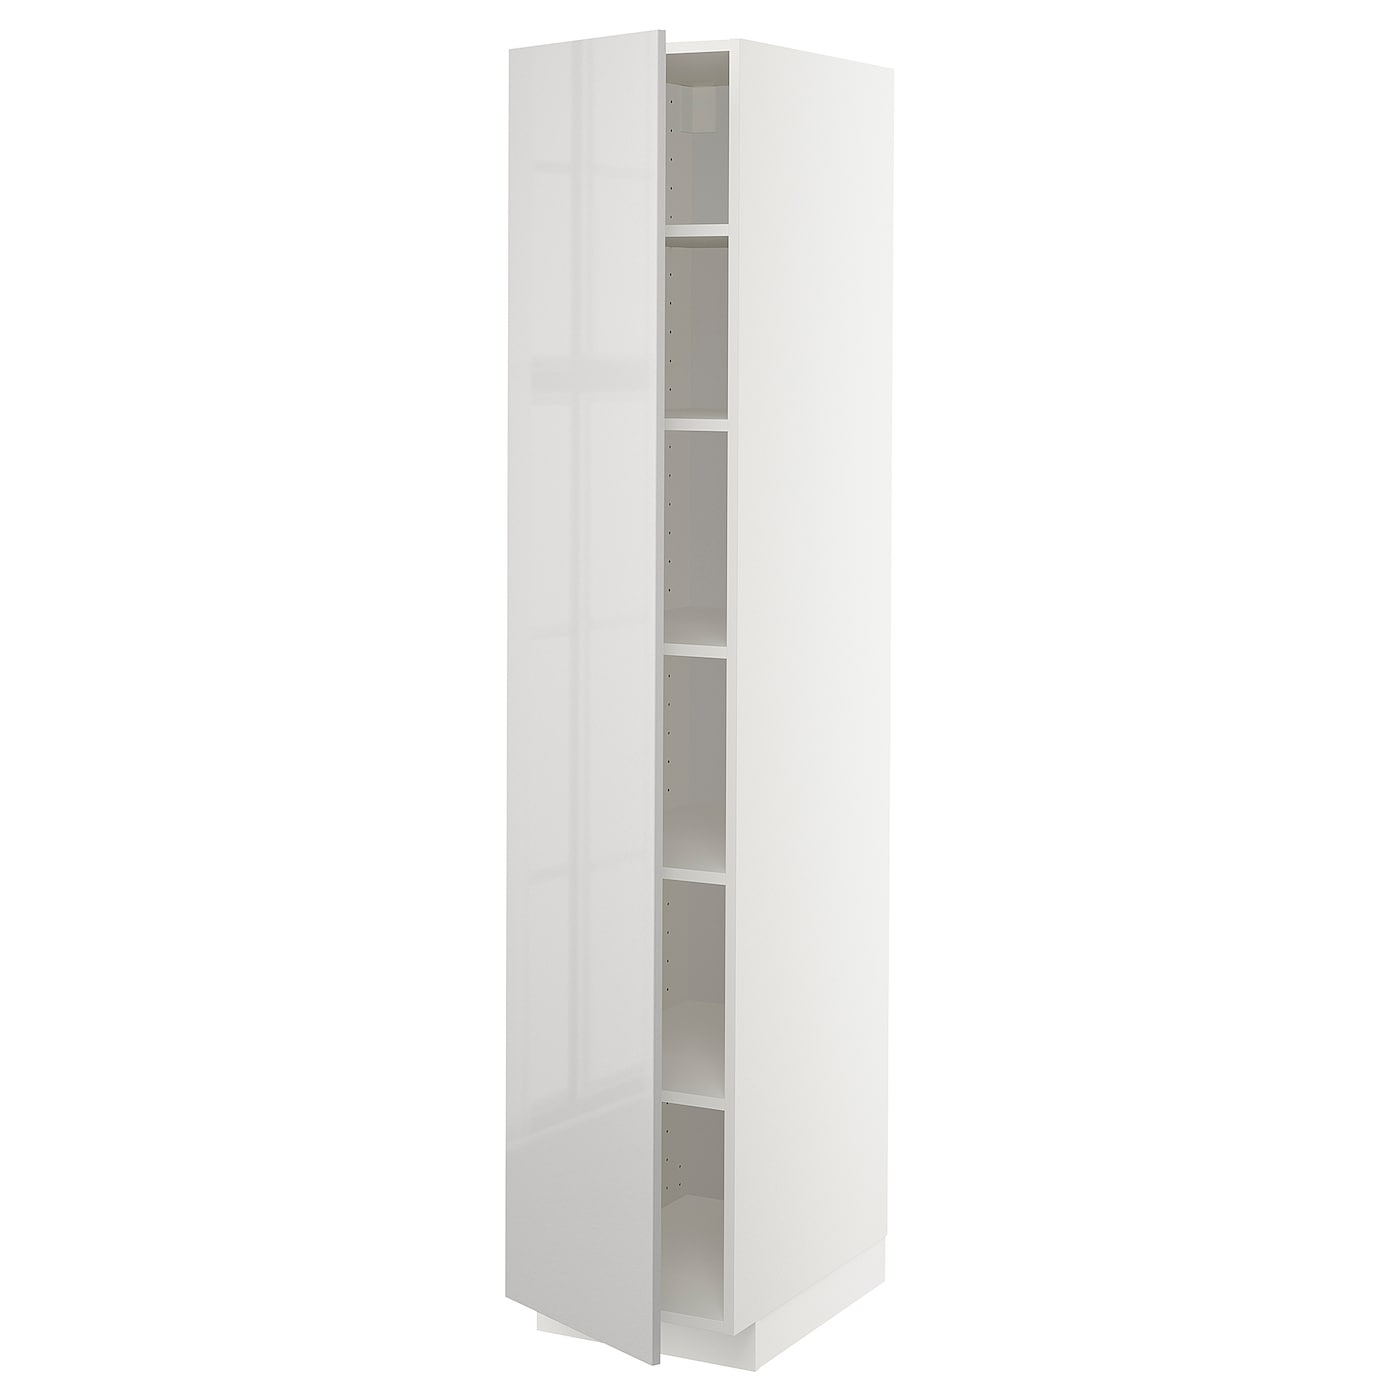 Высокий кухонный шкаф с полками - IKEA METOD/МЕТОД ИКЕА, 200х60х40 см, белый/светло-серый глянцевый